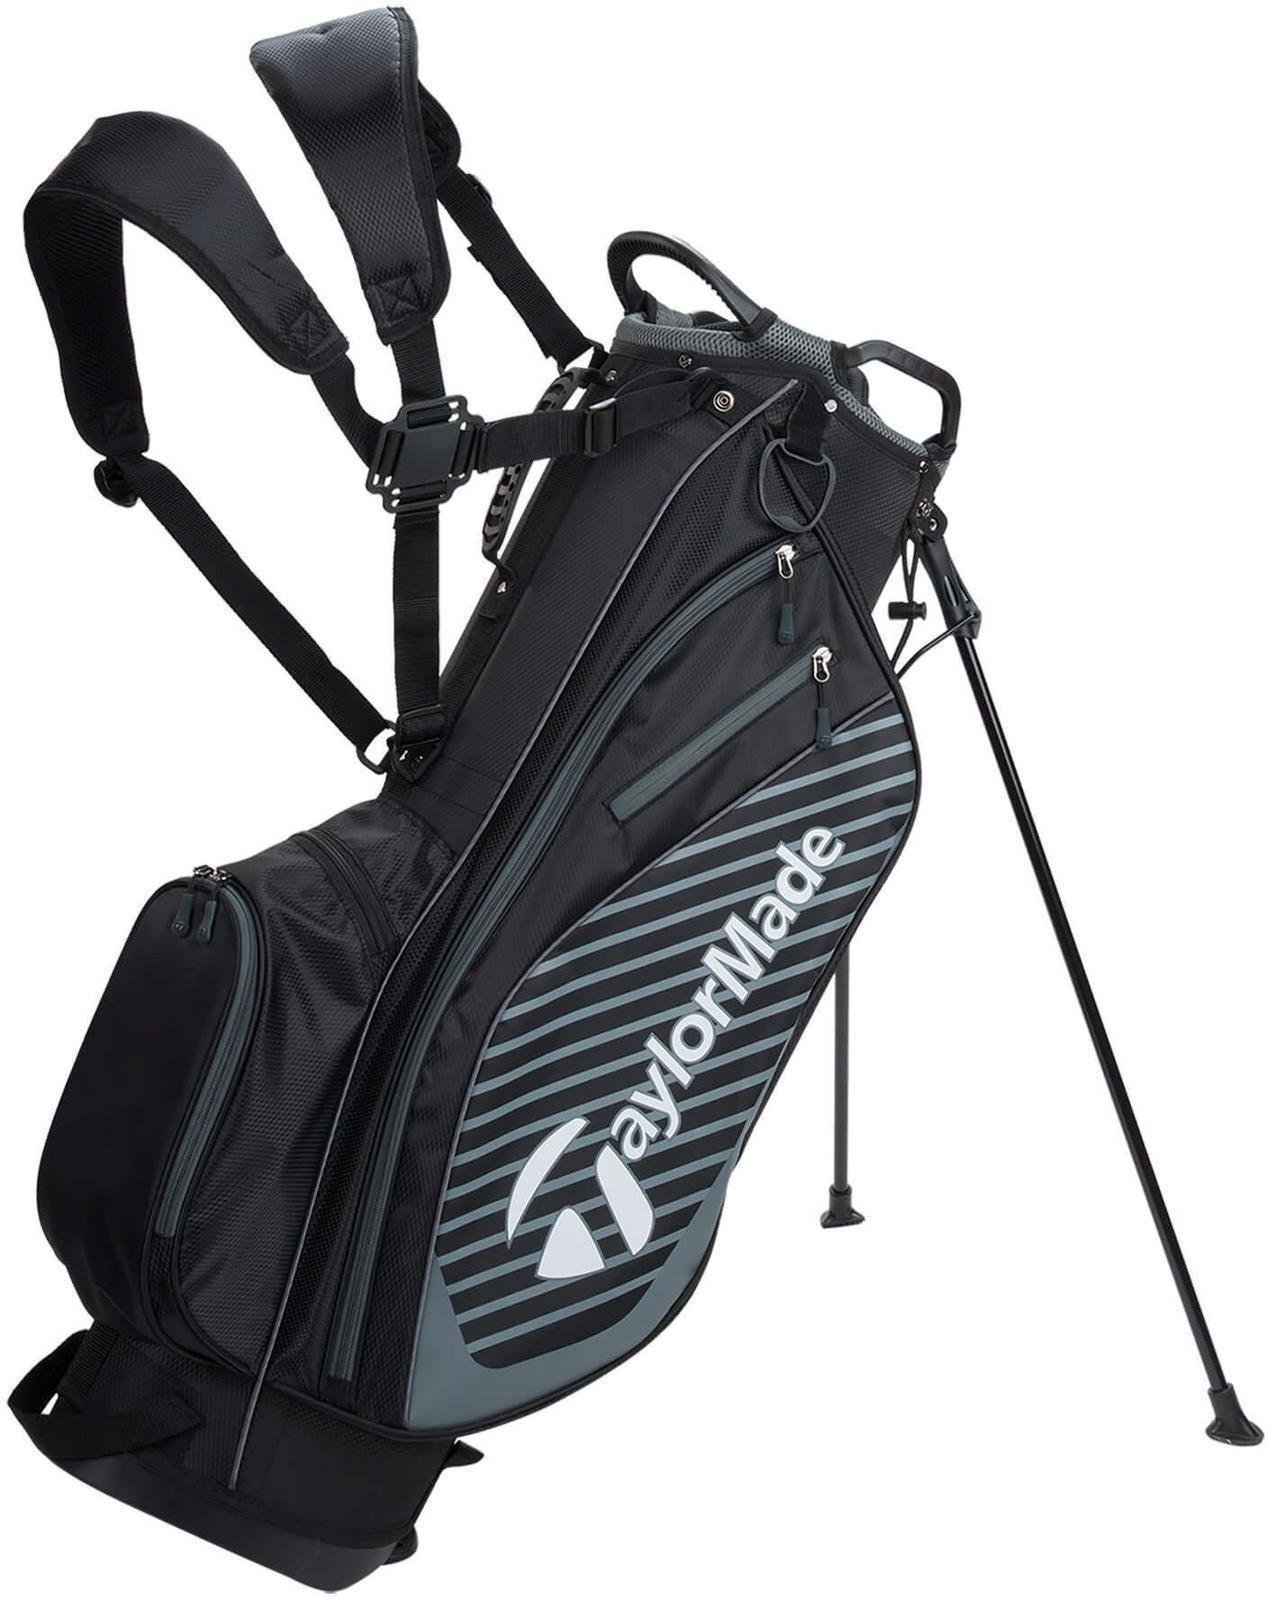 Saco de golfe TaylorMade Pro 6.0 Black/Charcoal Stand Bag